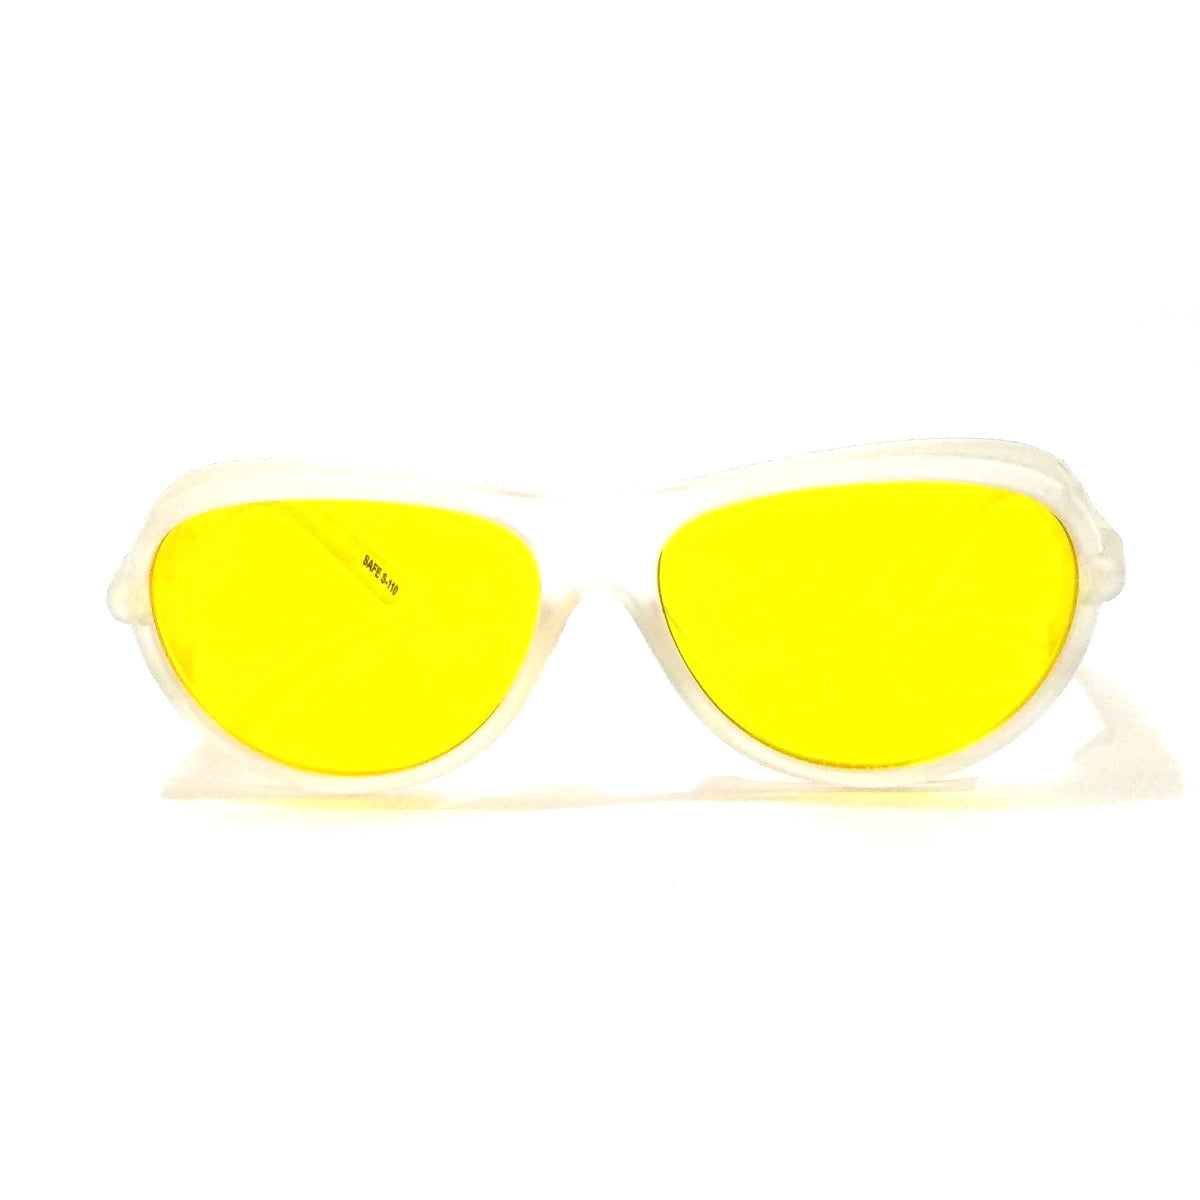 Yellow Lens Prescription Eye Safety Night Driving Glasses M110-63 - Glasses India Online